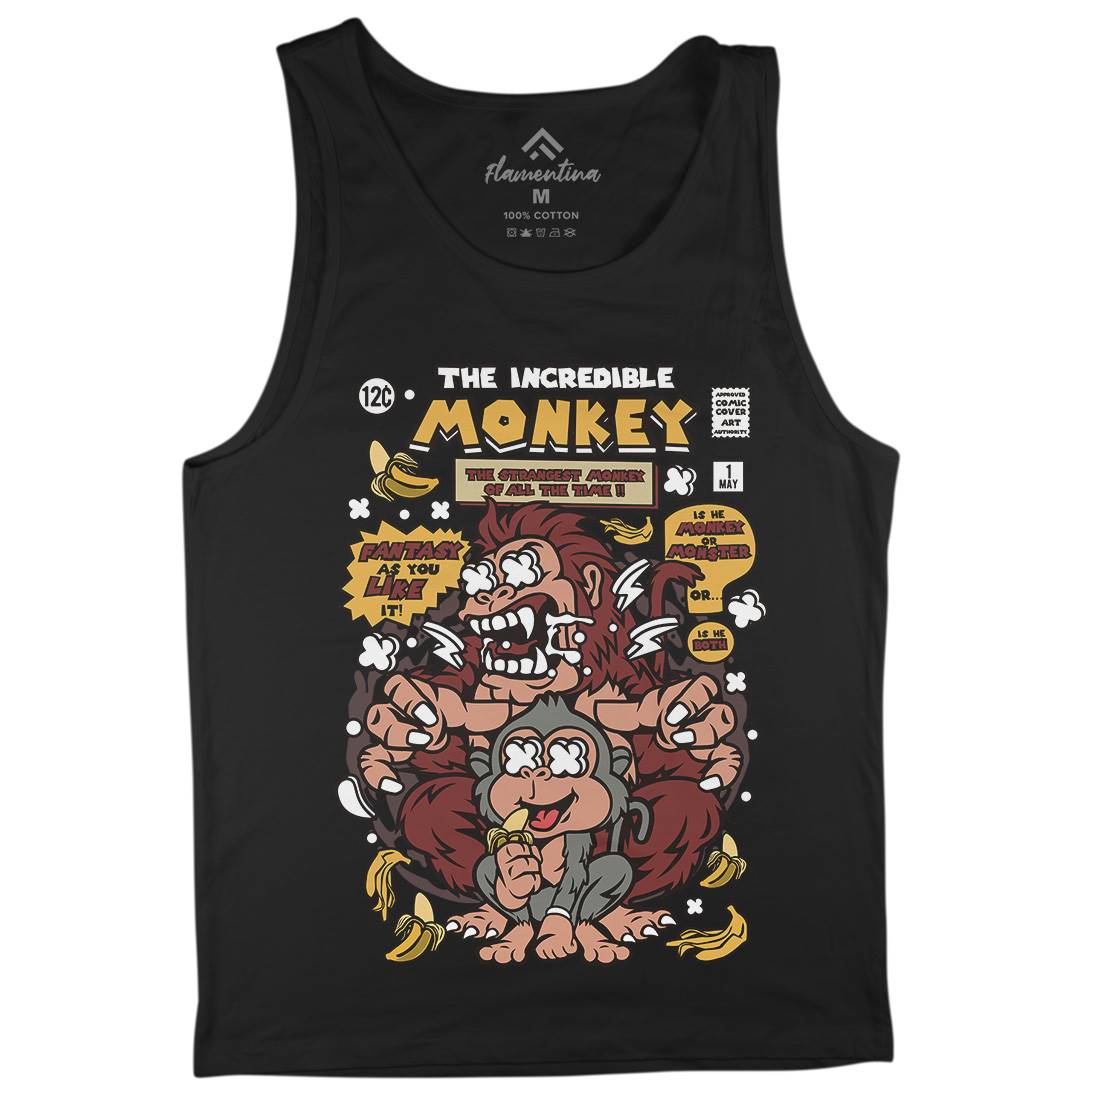 Incredible Monkey Mens Tank Top Vest Animals C570